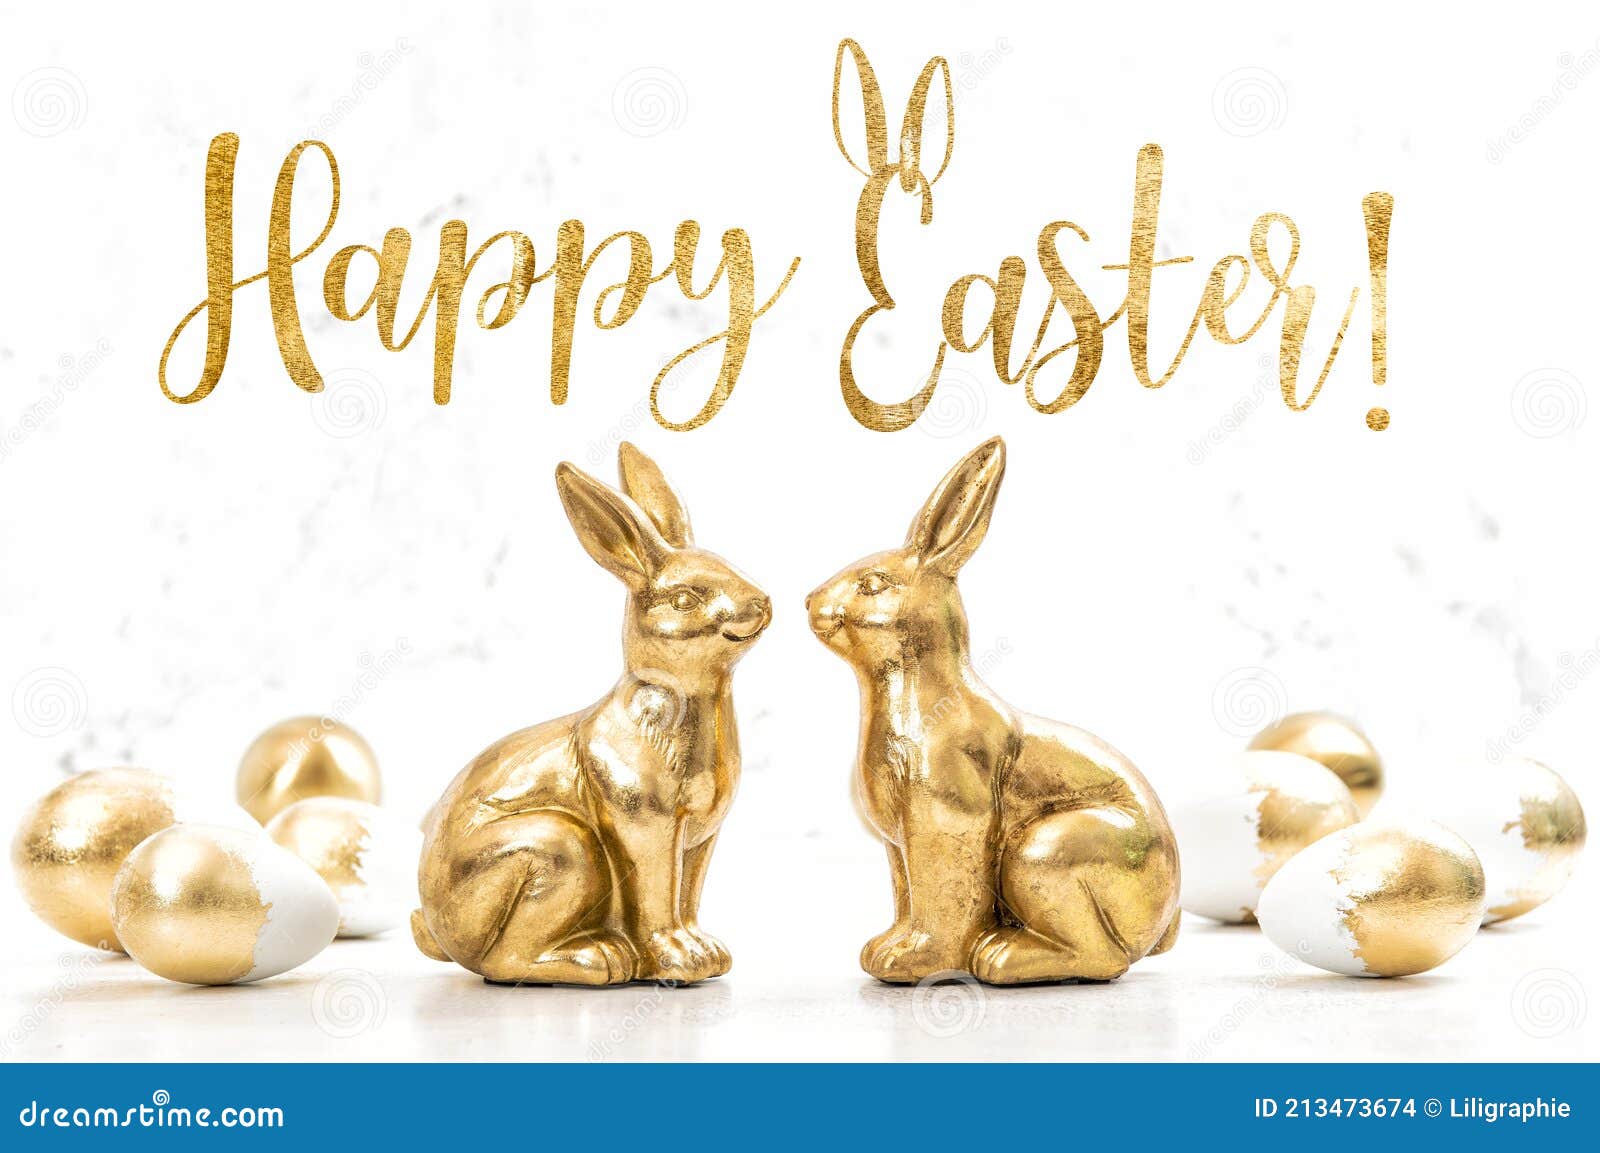 happy easter golden bunnies easter eggs decoration